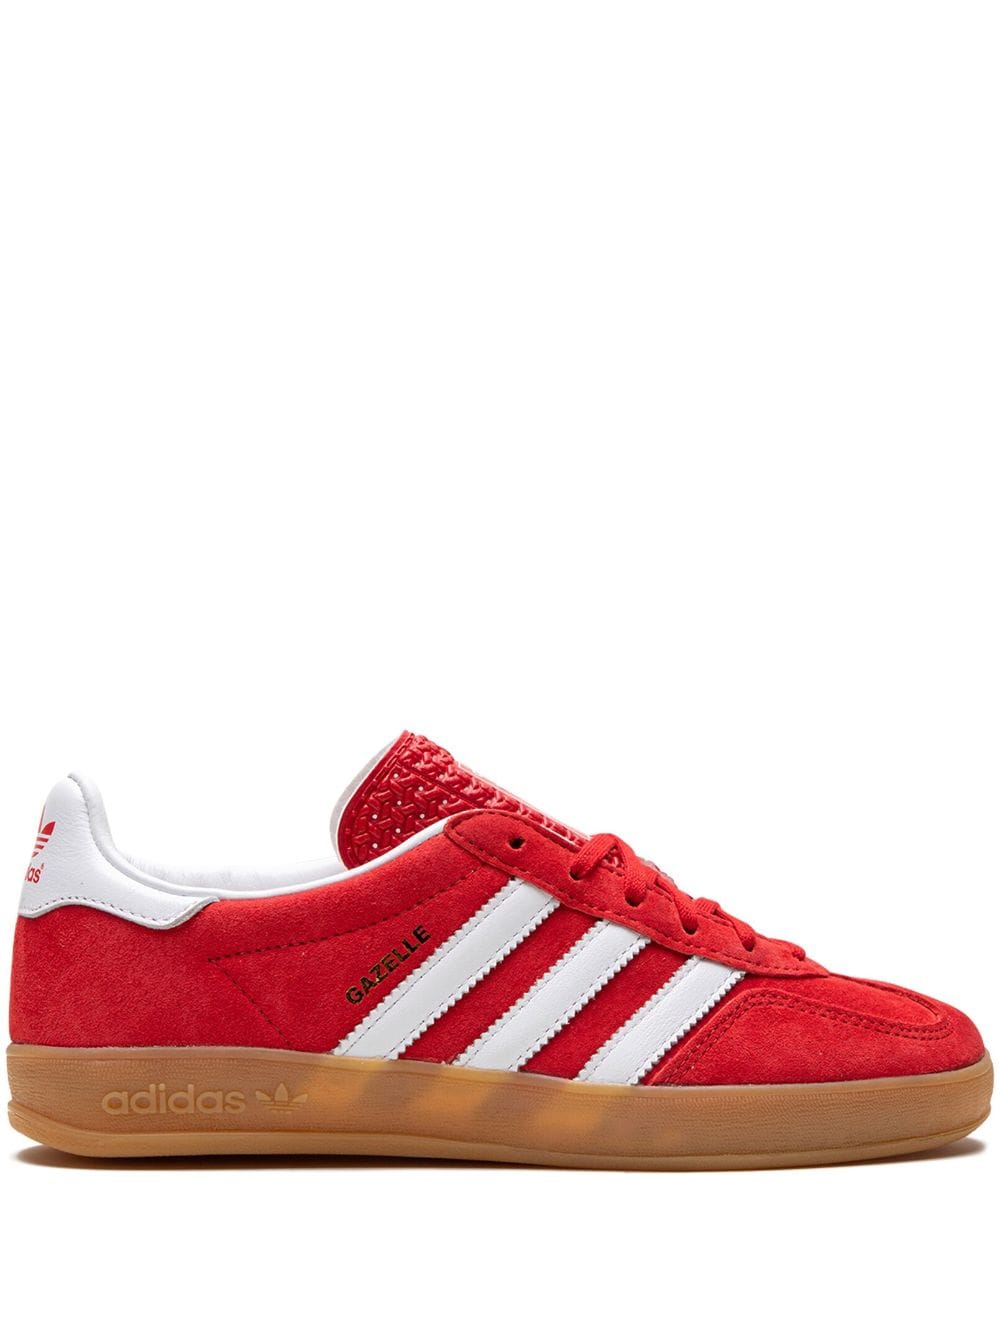 adidas Gazelle Indoor "Scarlet/Cloud White" sneakers - Red von adidas